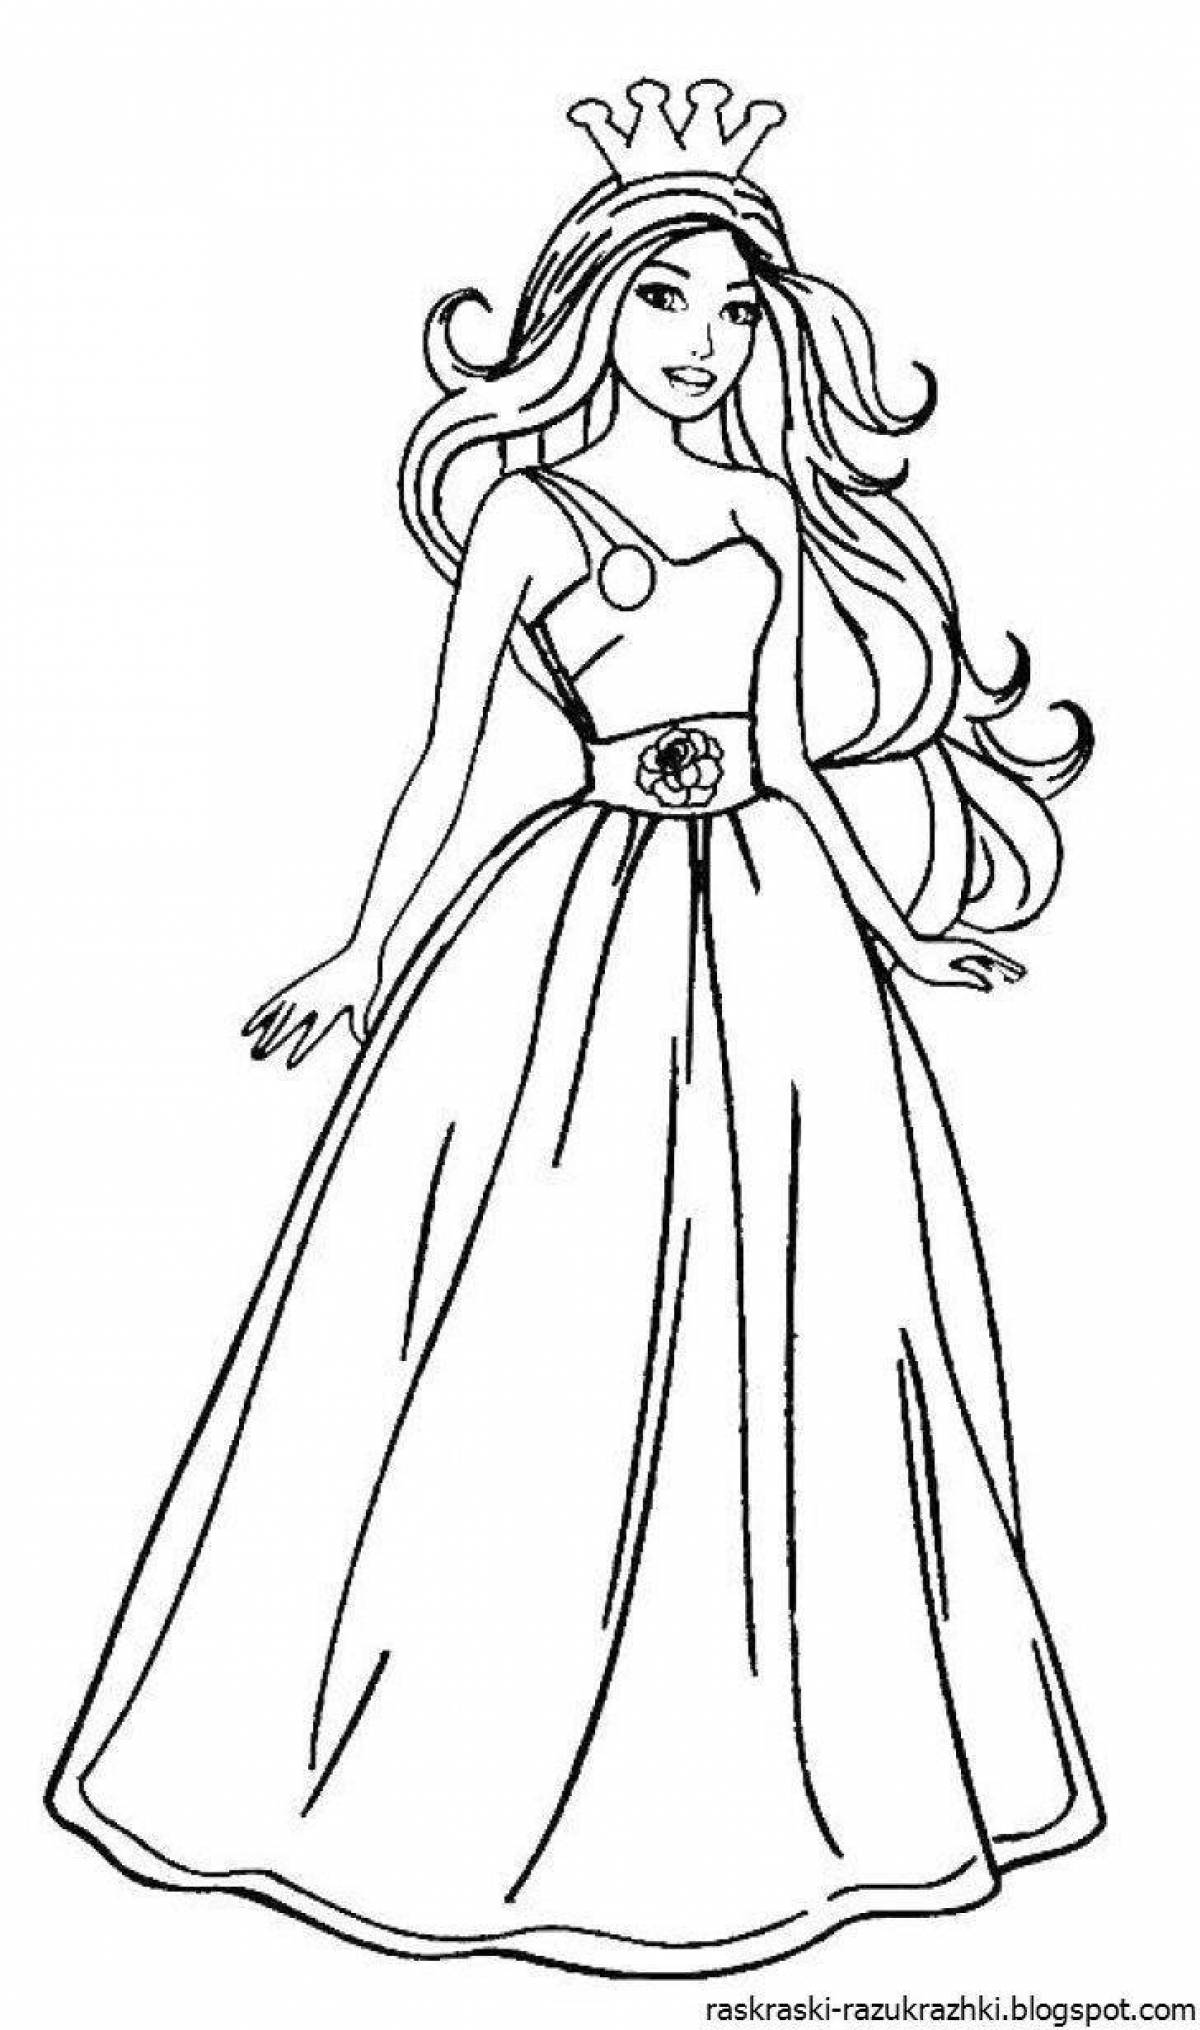 Glamor coloring girl in a dress